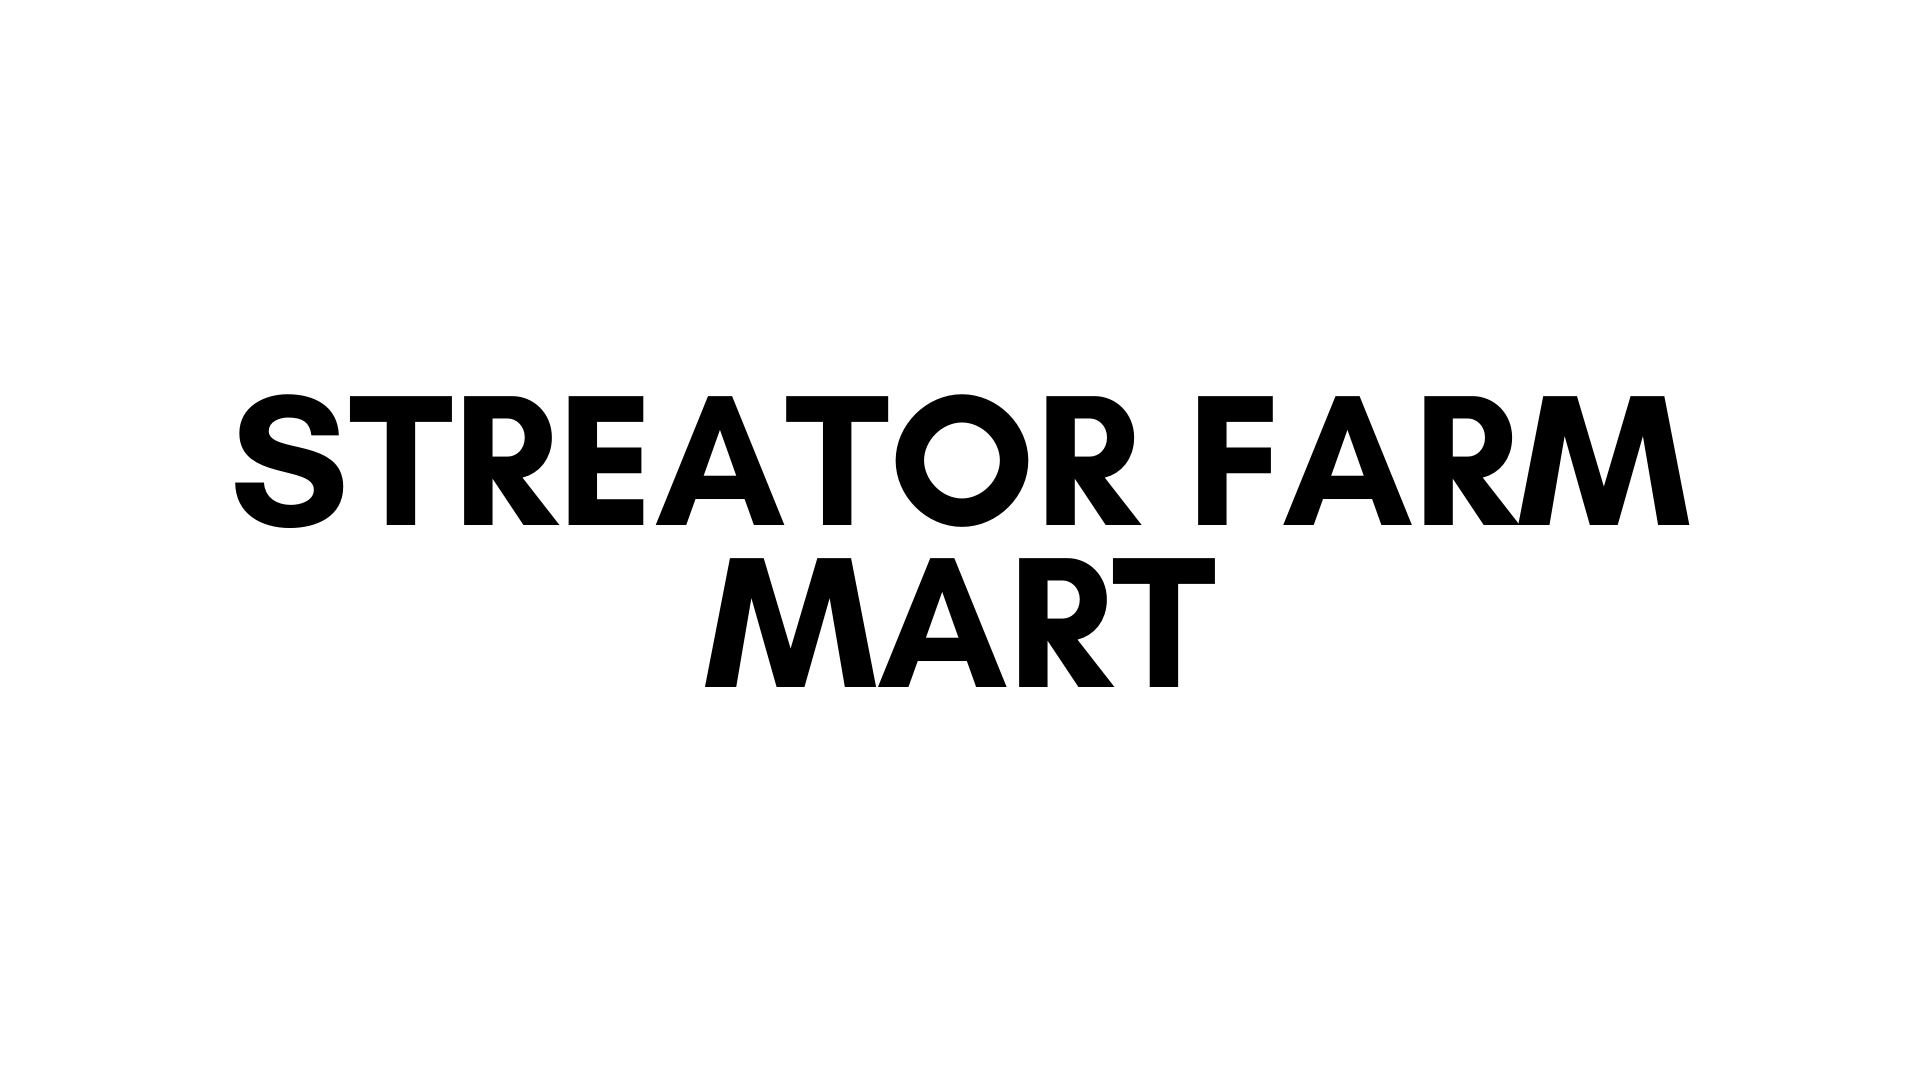 STREATOR FARM MART